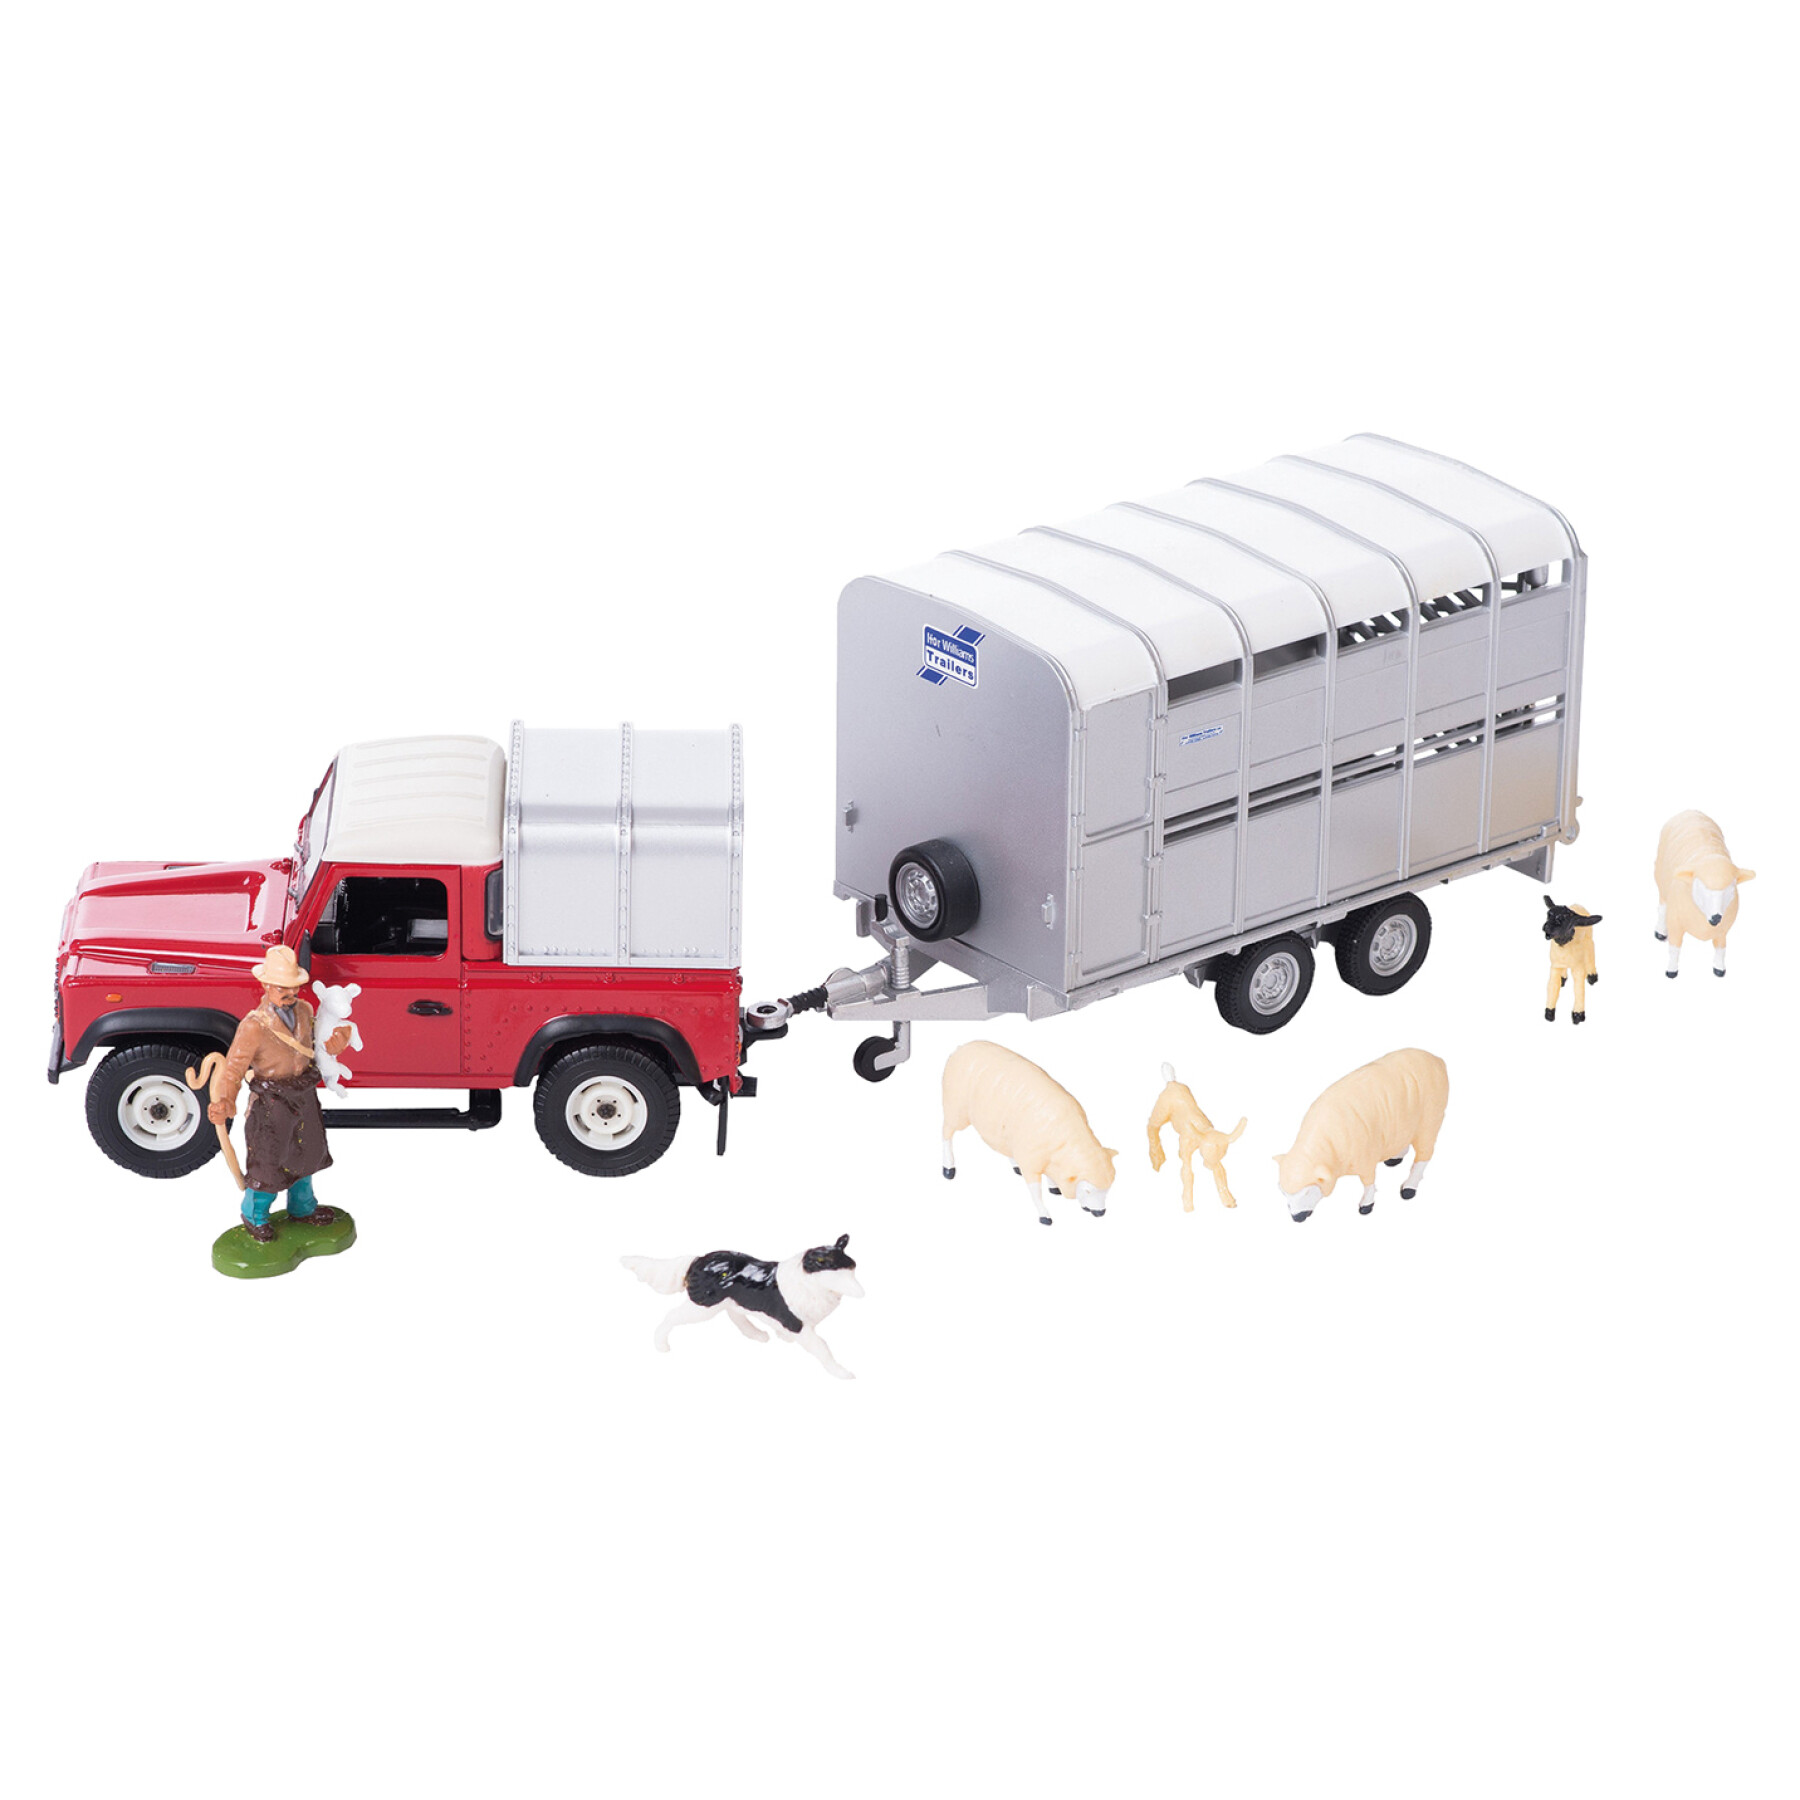 Sheep farming figurine Britains Farm Toys